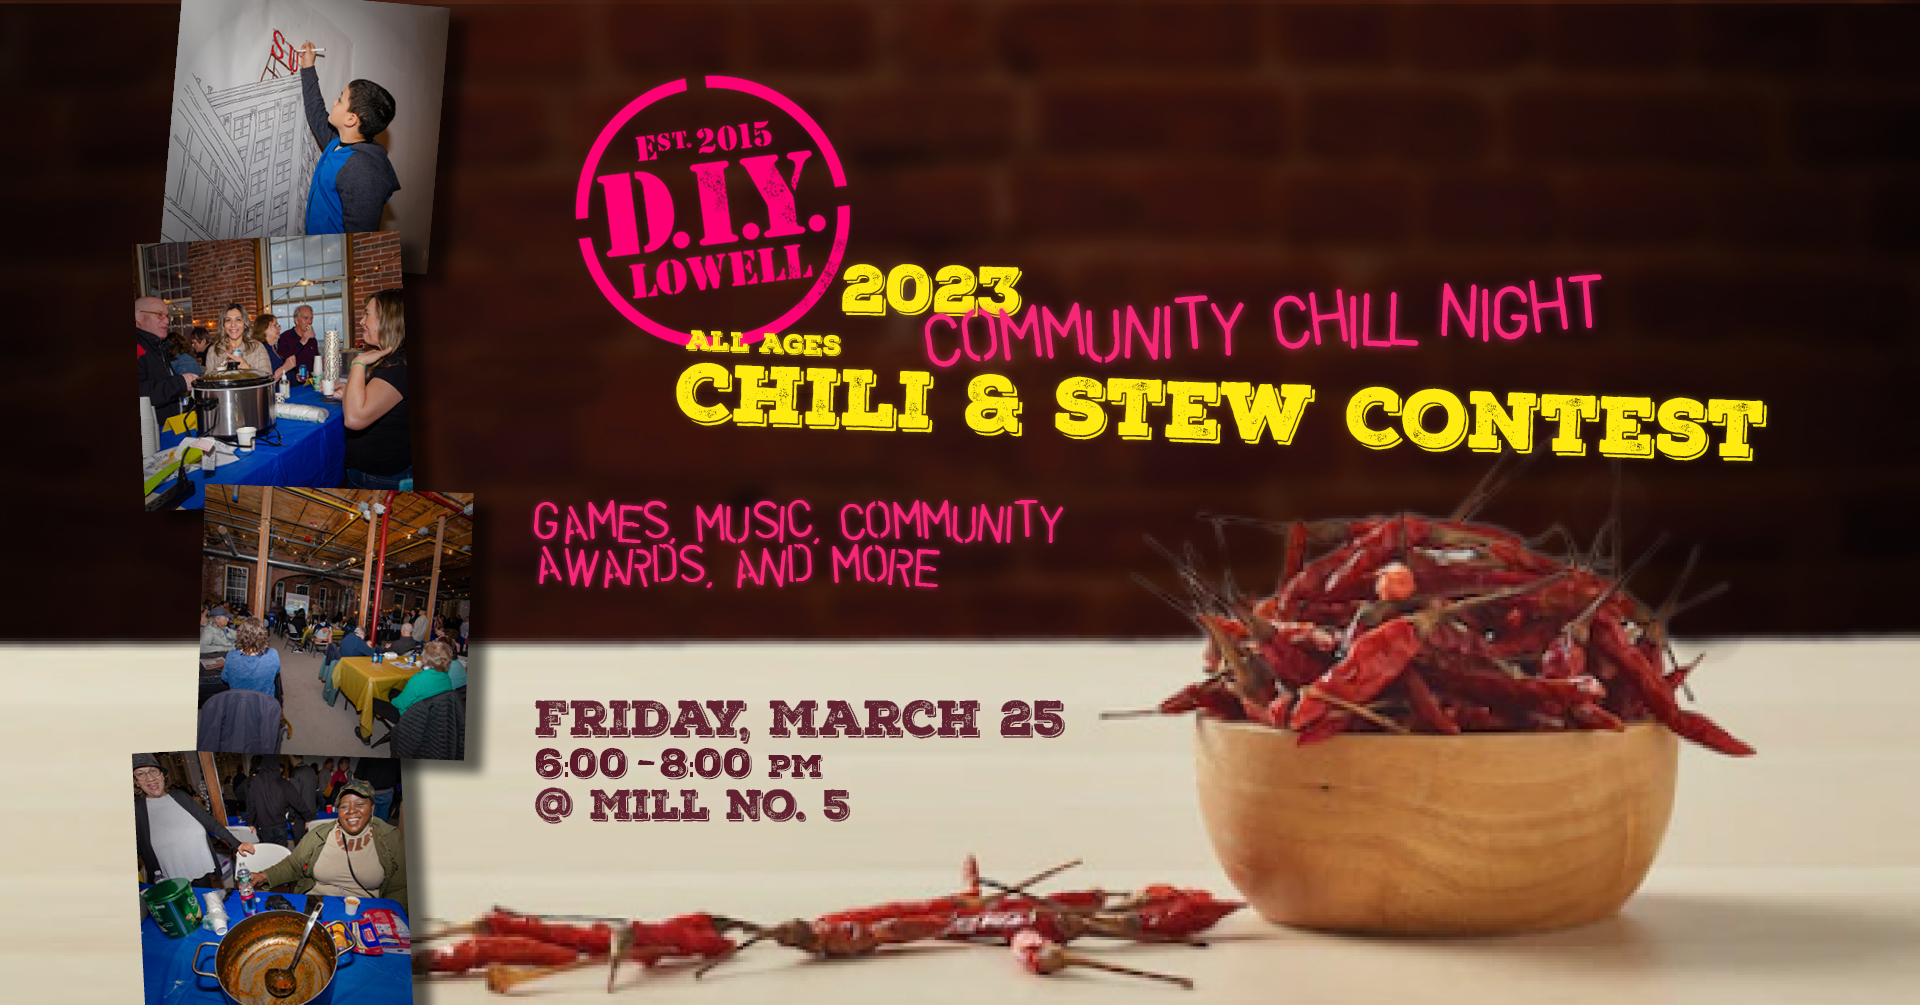 DIY Community Chill Night Chili and Stew Contest